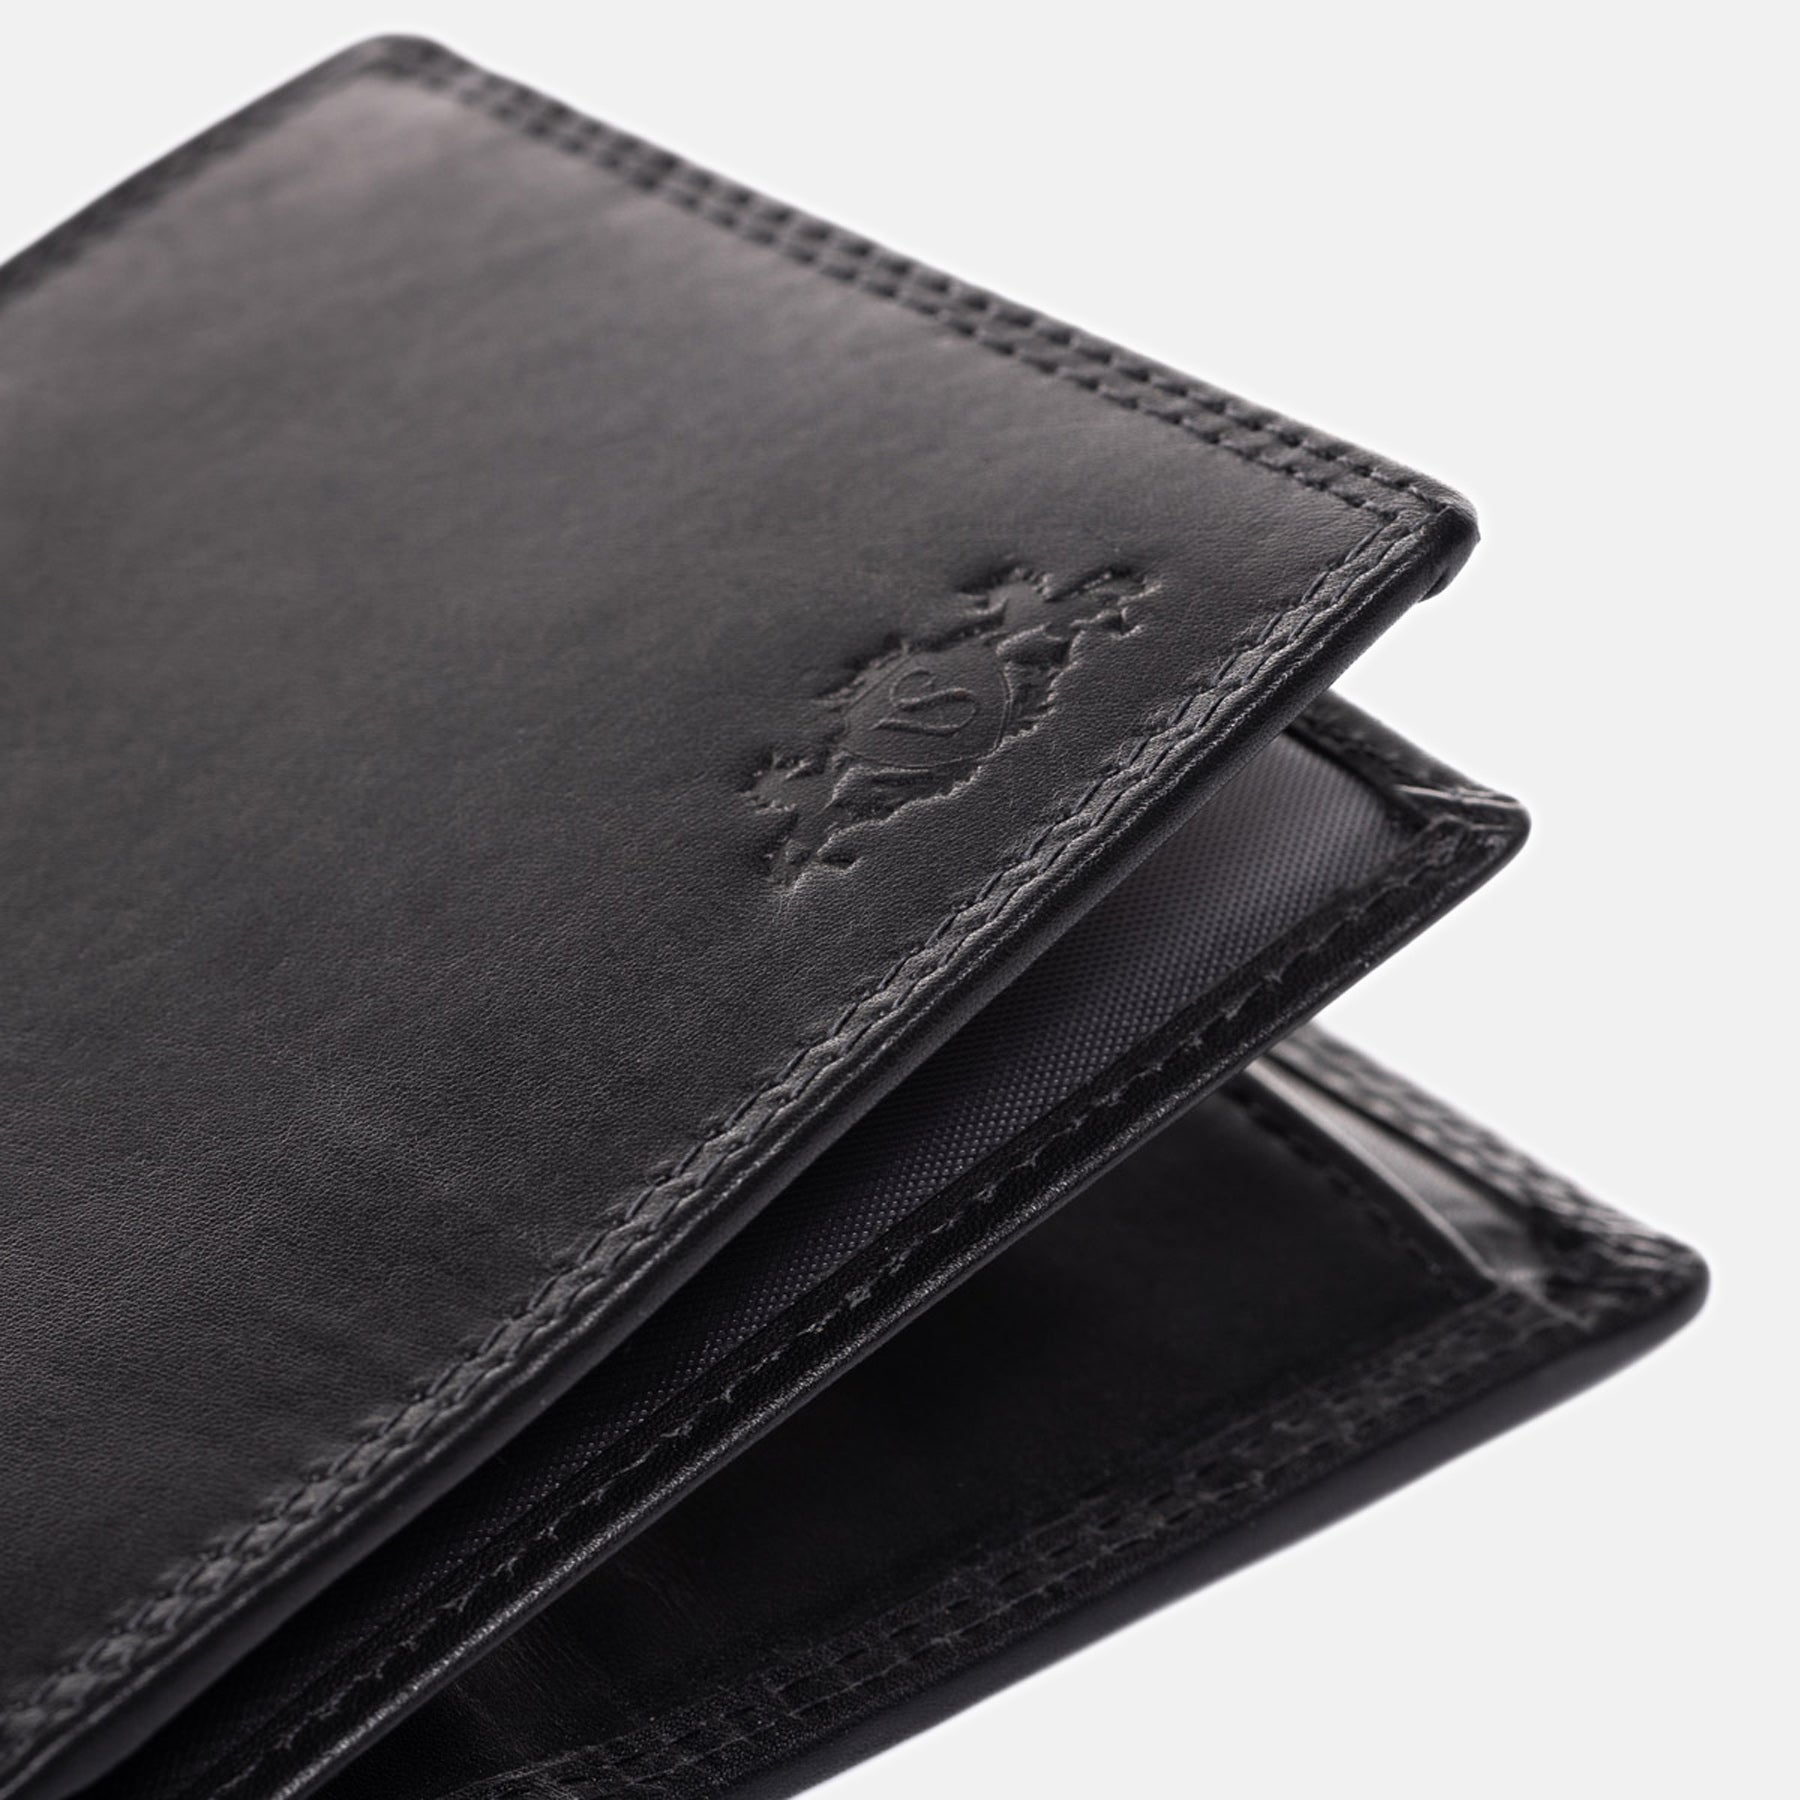 Wallet BARNEY RFID smooth leather black